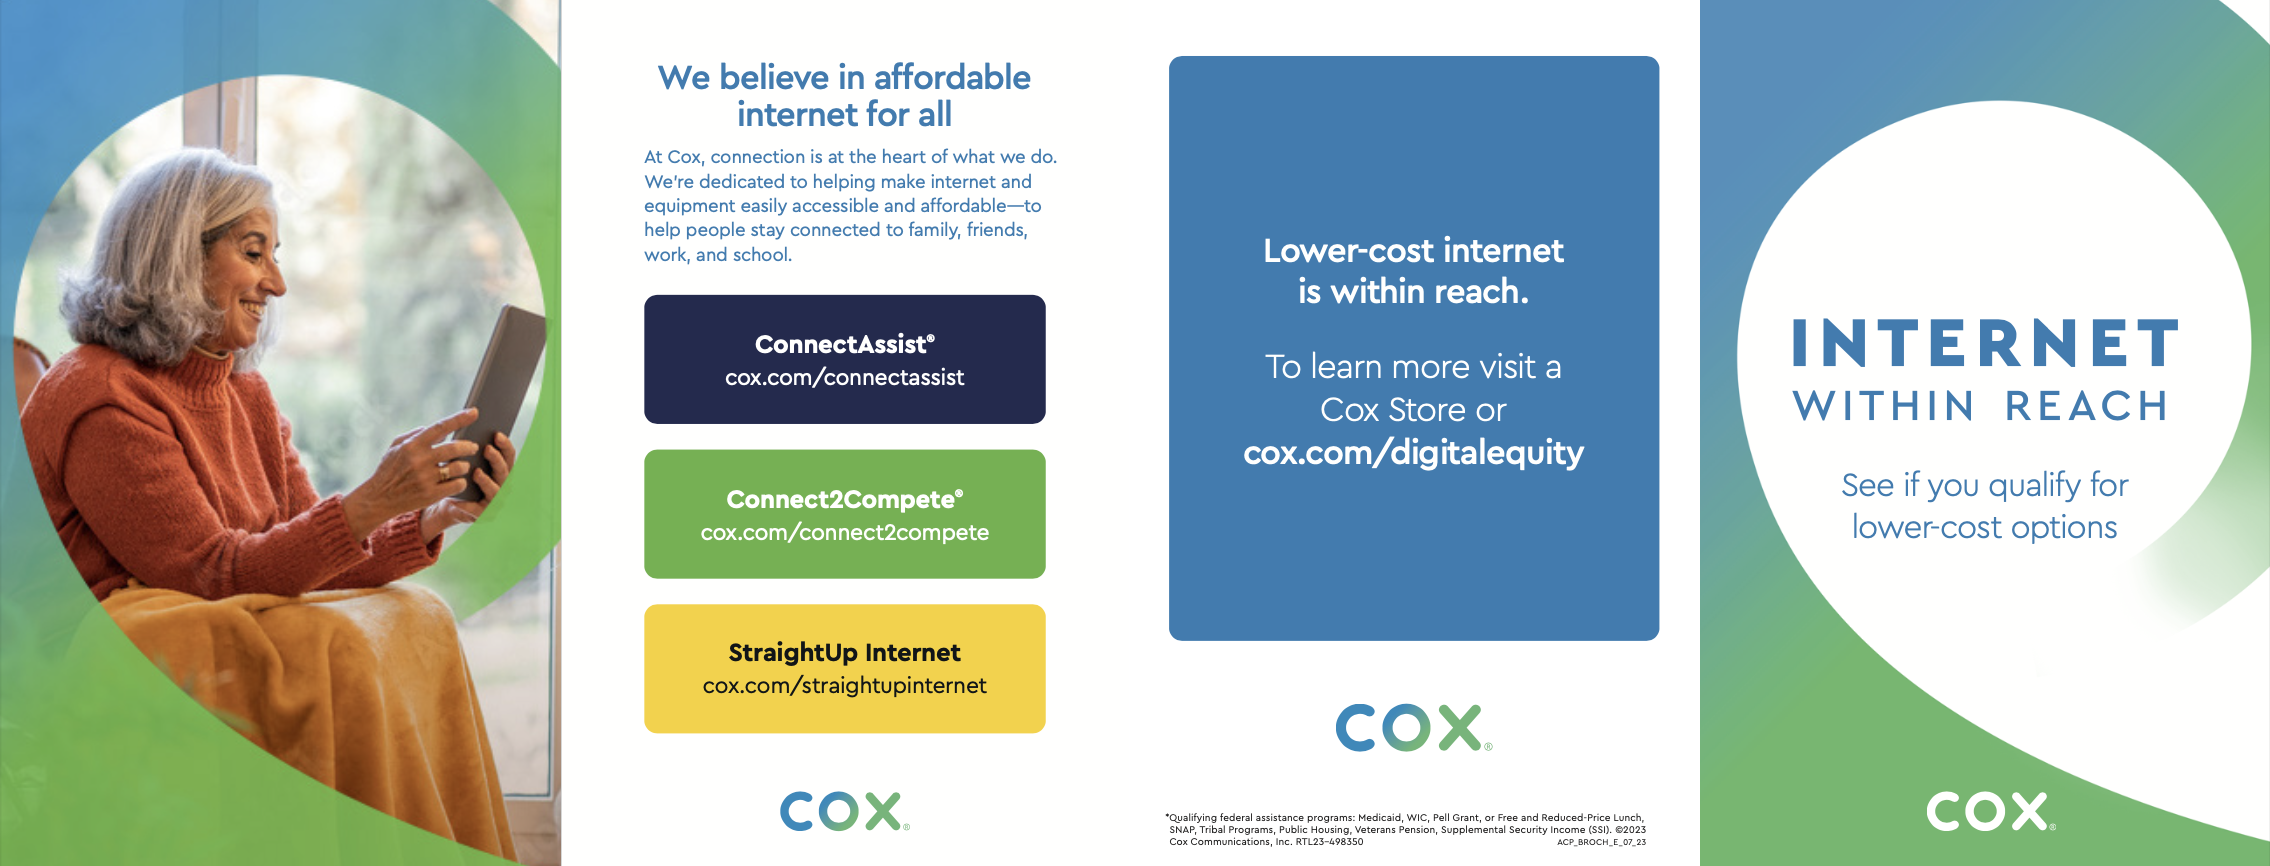 Affordable Cox Internet